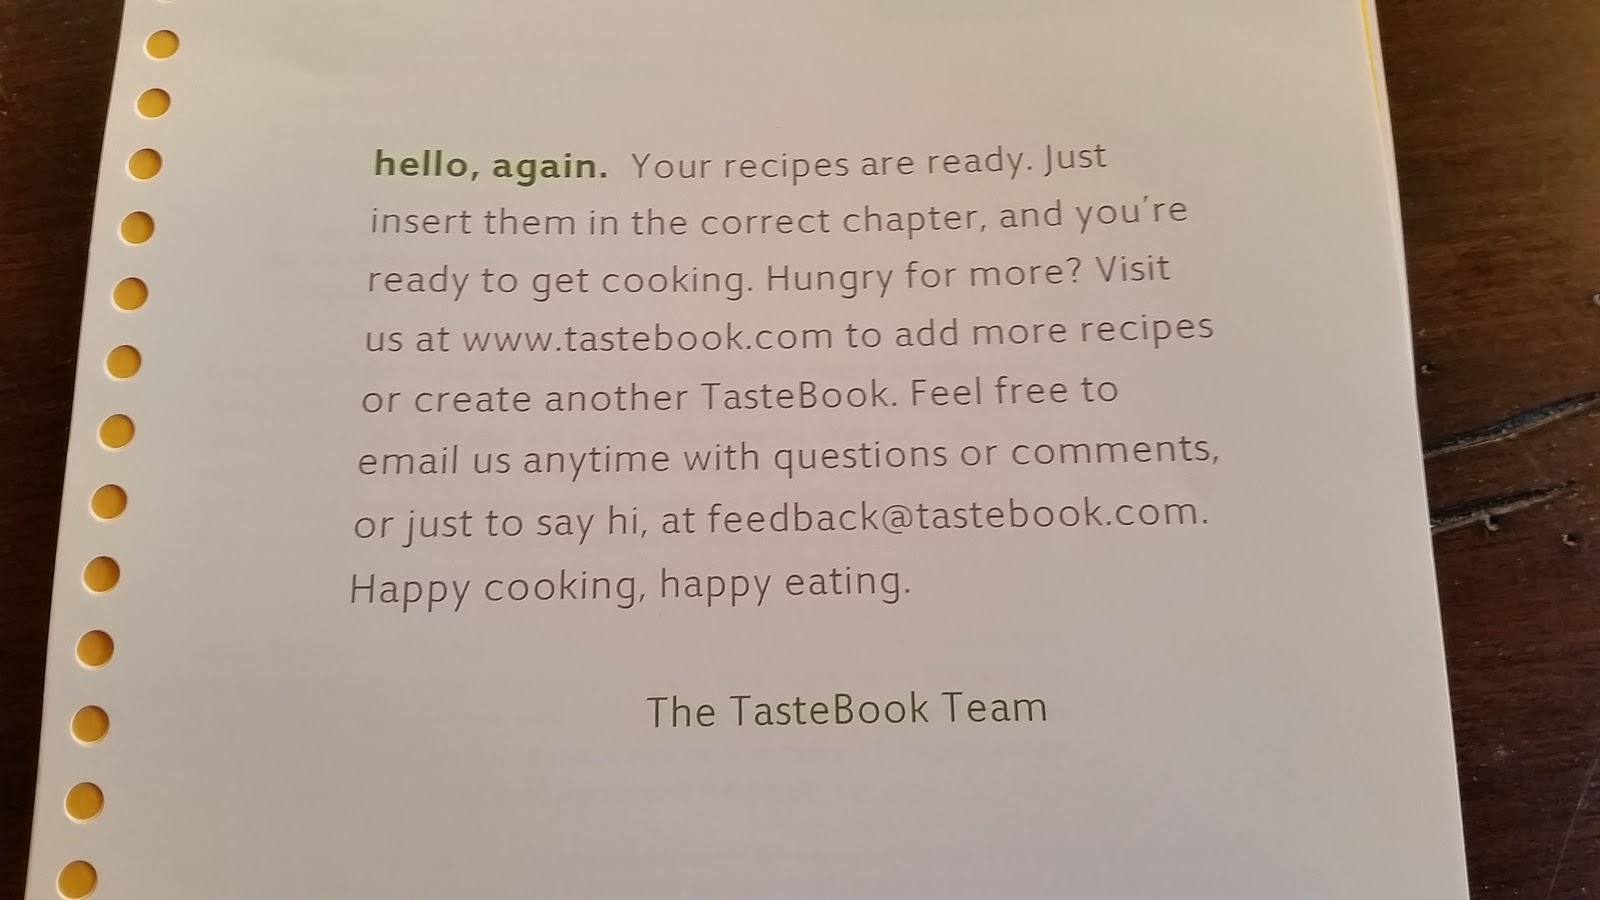 My Family Cookbook, My Family Cookbook